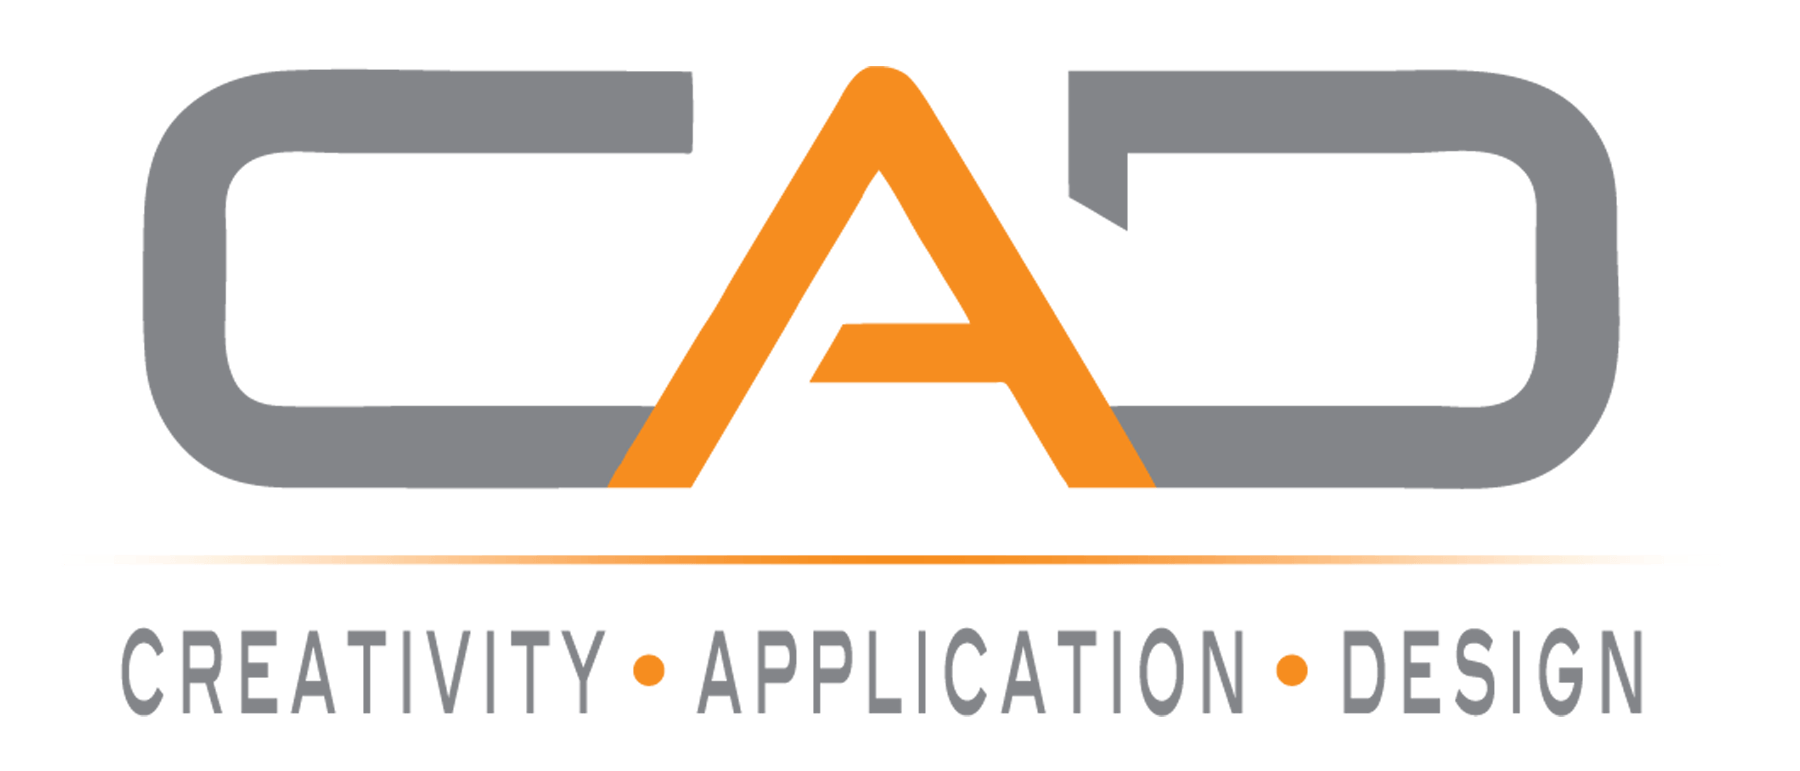 CAD Logo - Cox CAD | Creativity . Application . Design